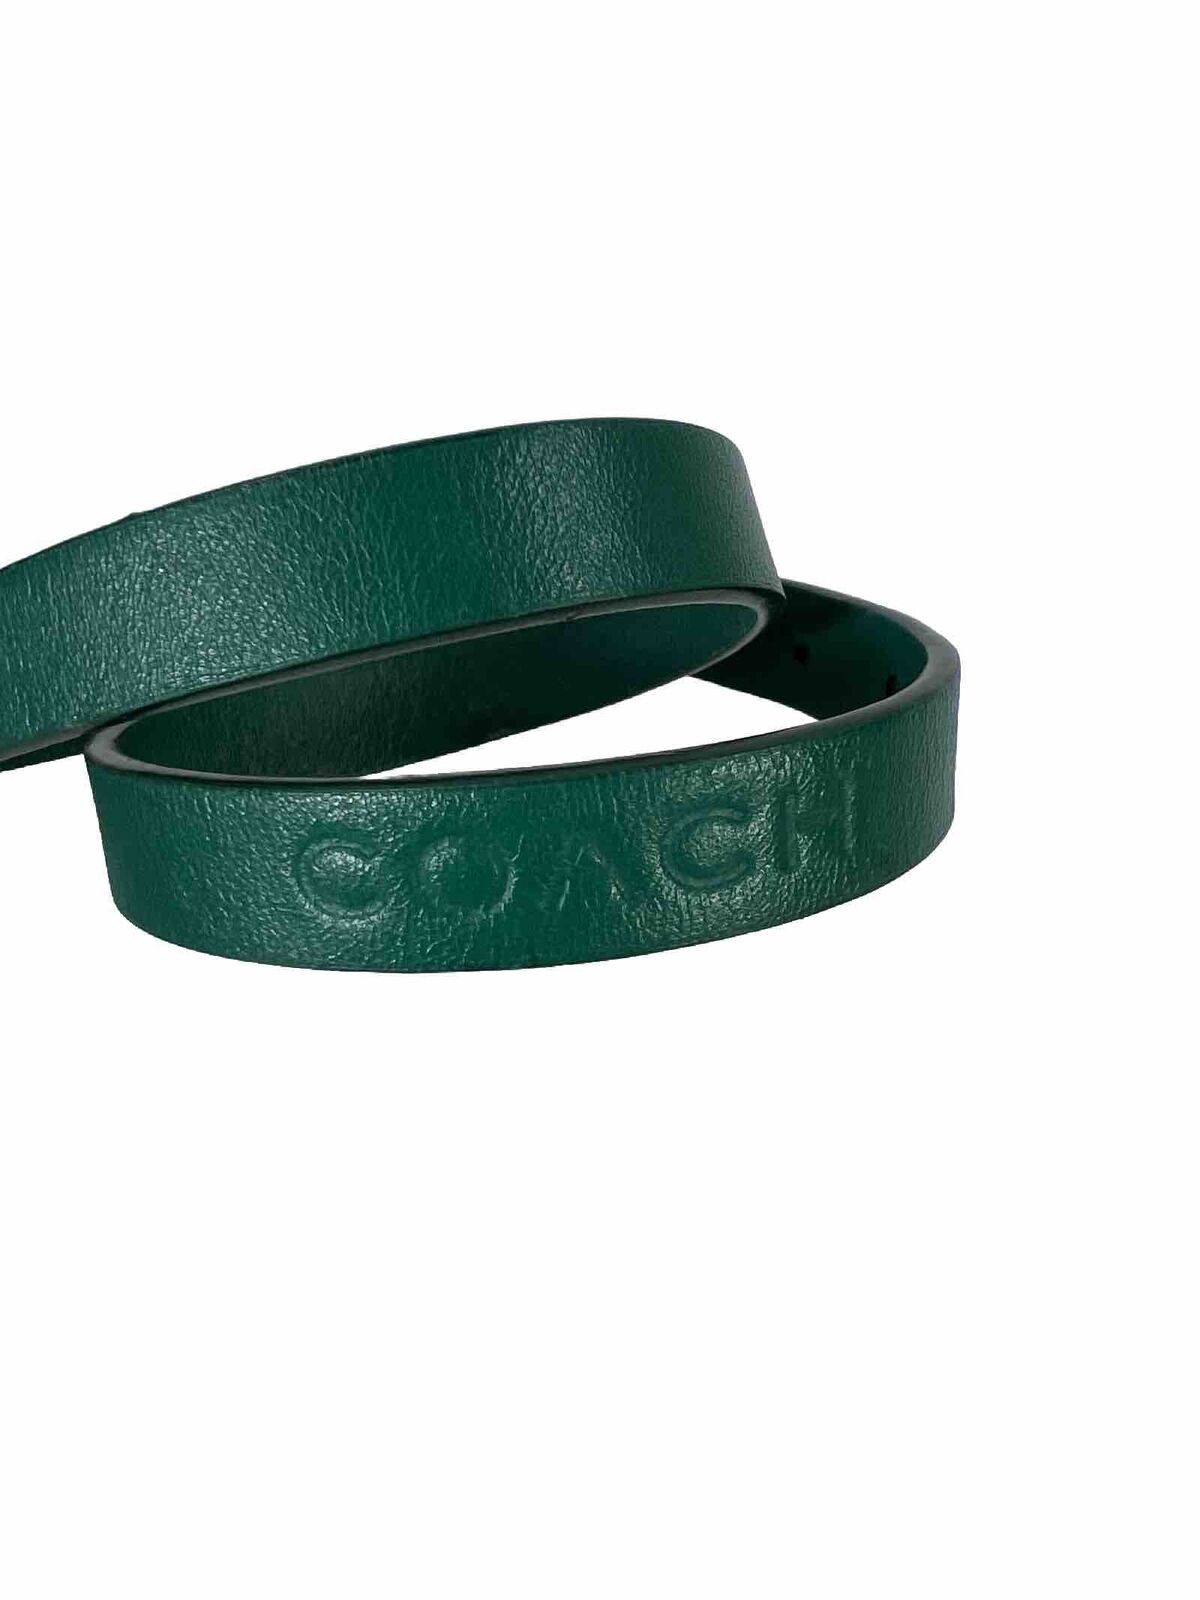 Coach Men's Green Leather Double Wrap Bracelet